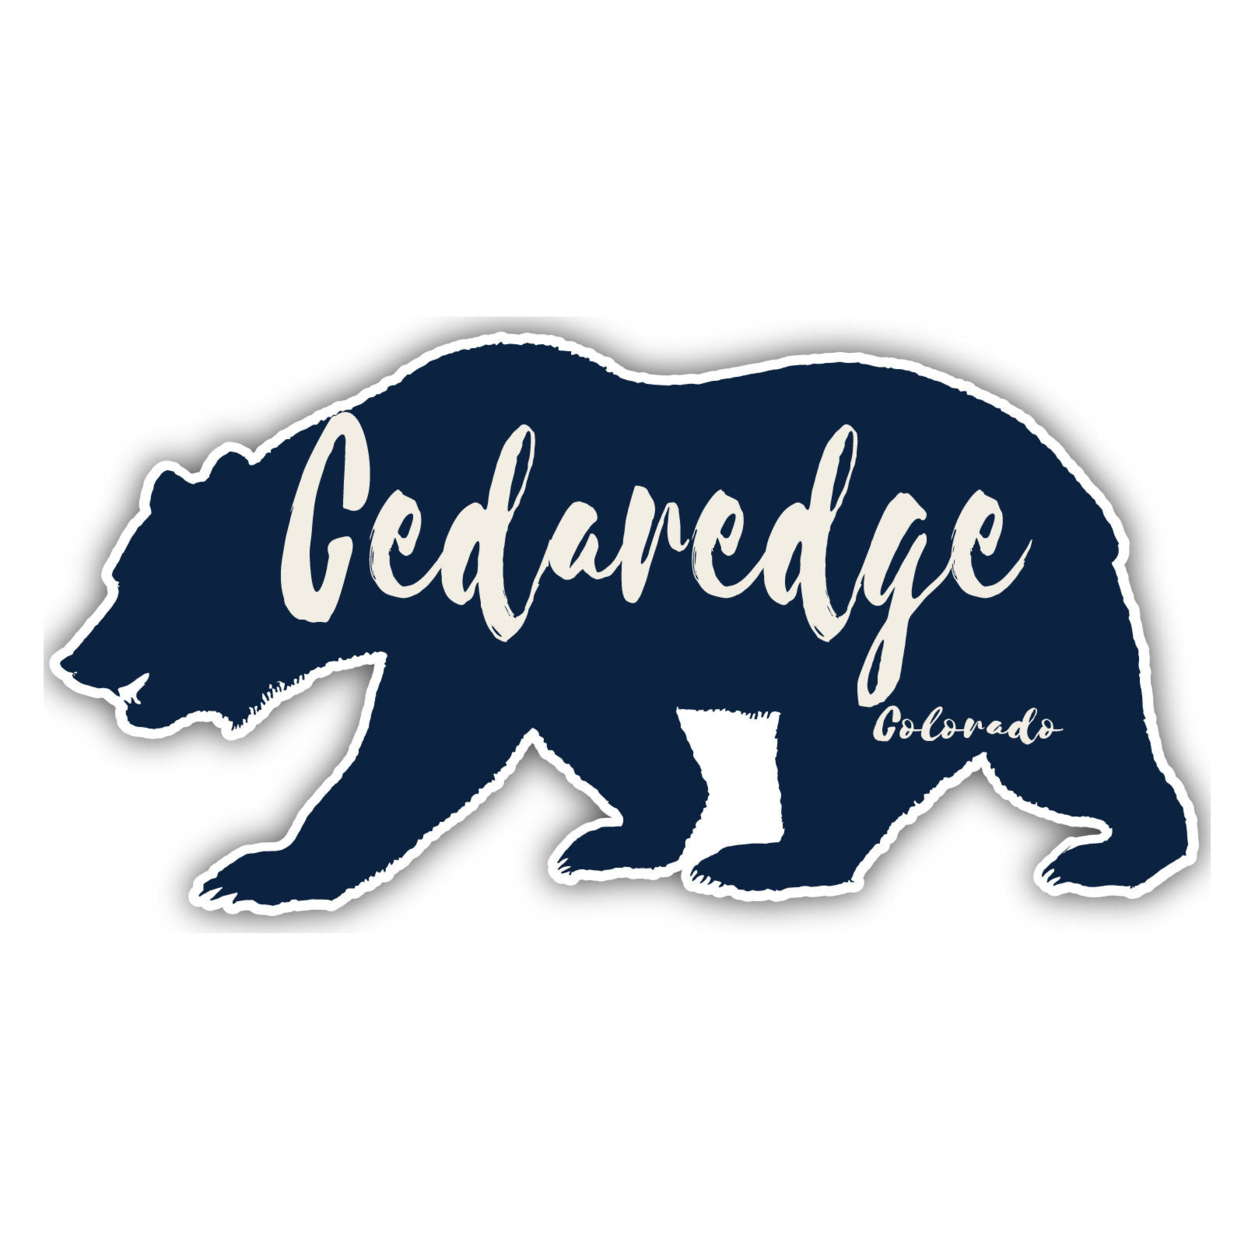 Cedaredge Colorado Souvenir Decorative Stickers (Choose Theme And Size) - Single Unit, 8-Inch, Bear